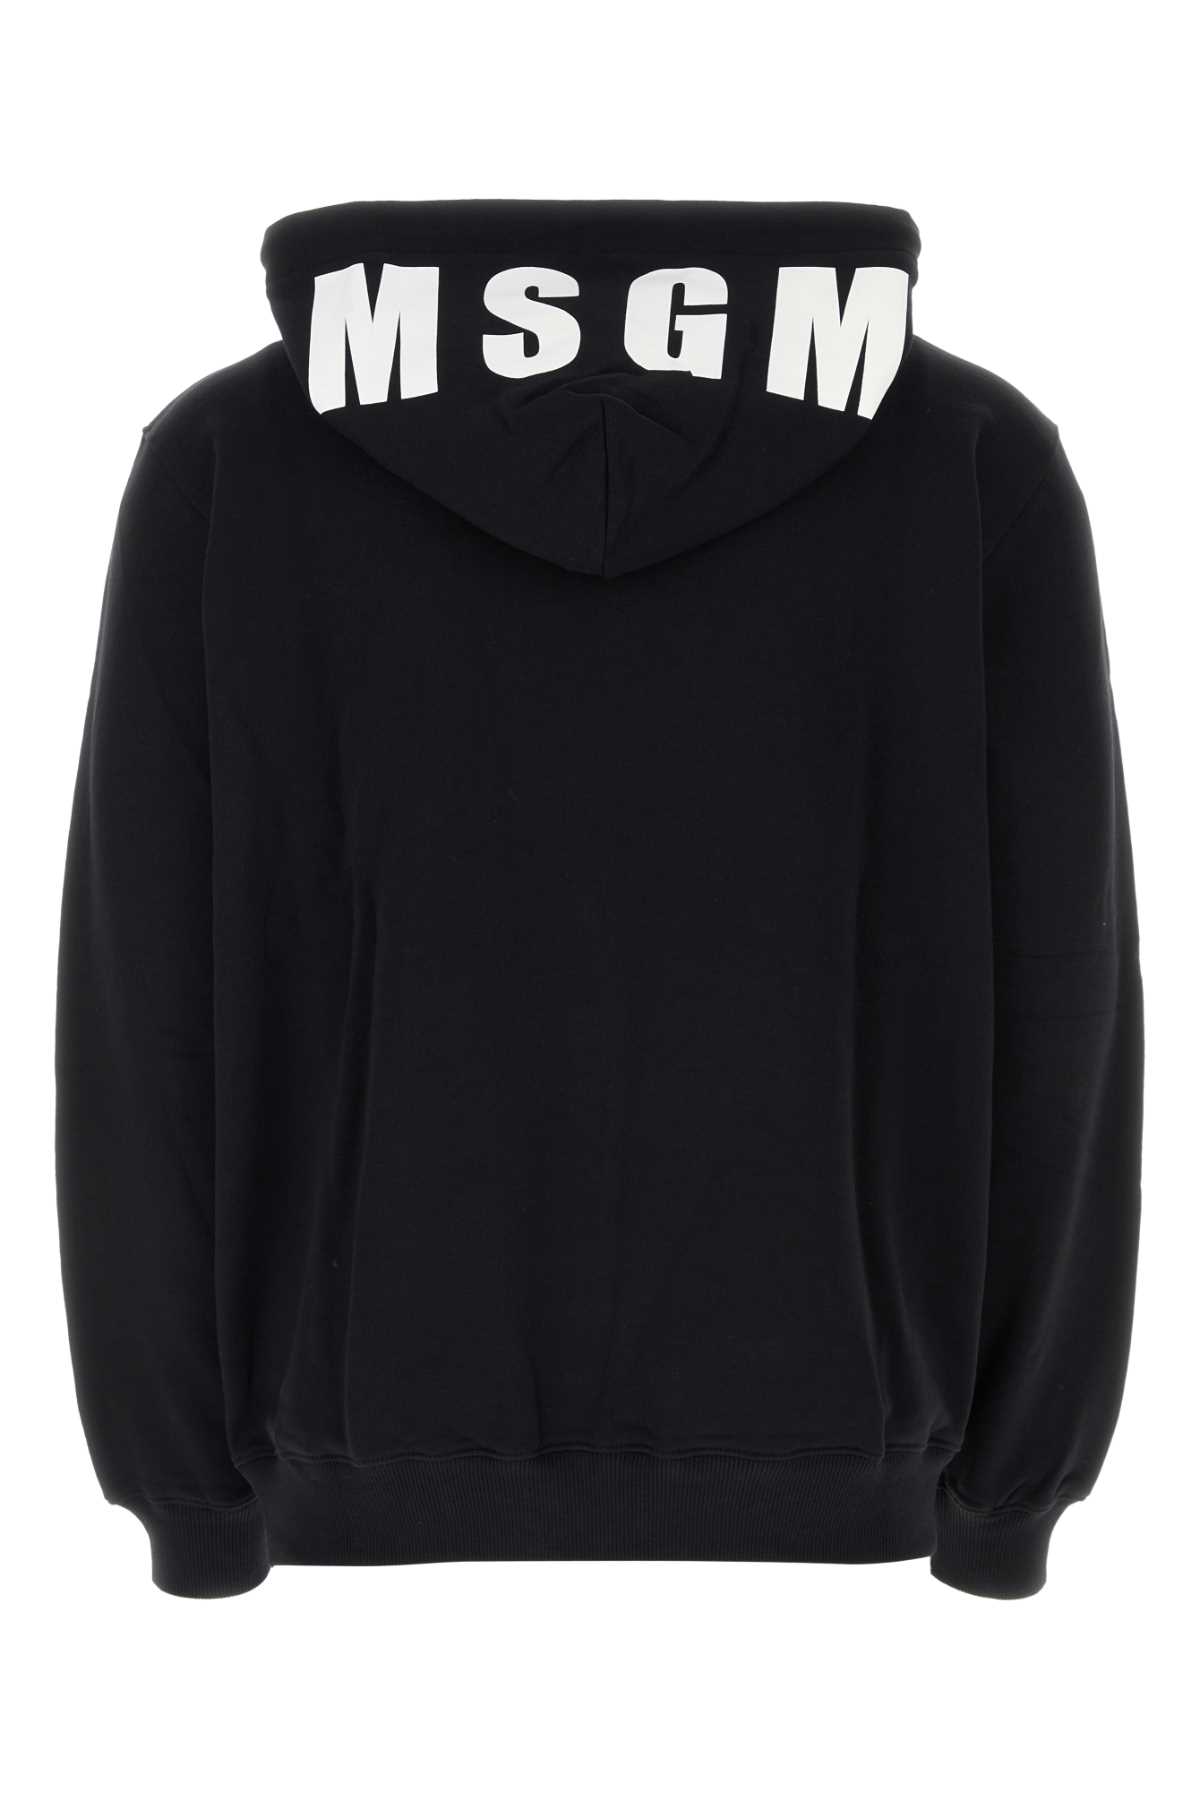 Msgm Black Cotton Sweatshirt In Black99